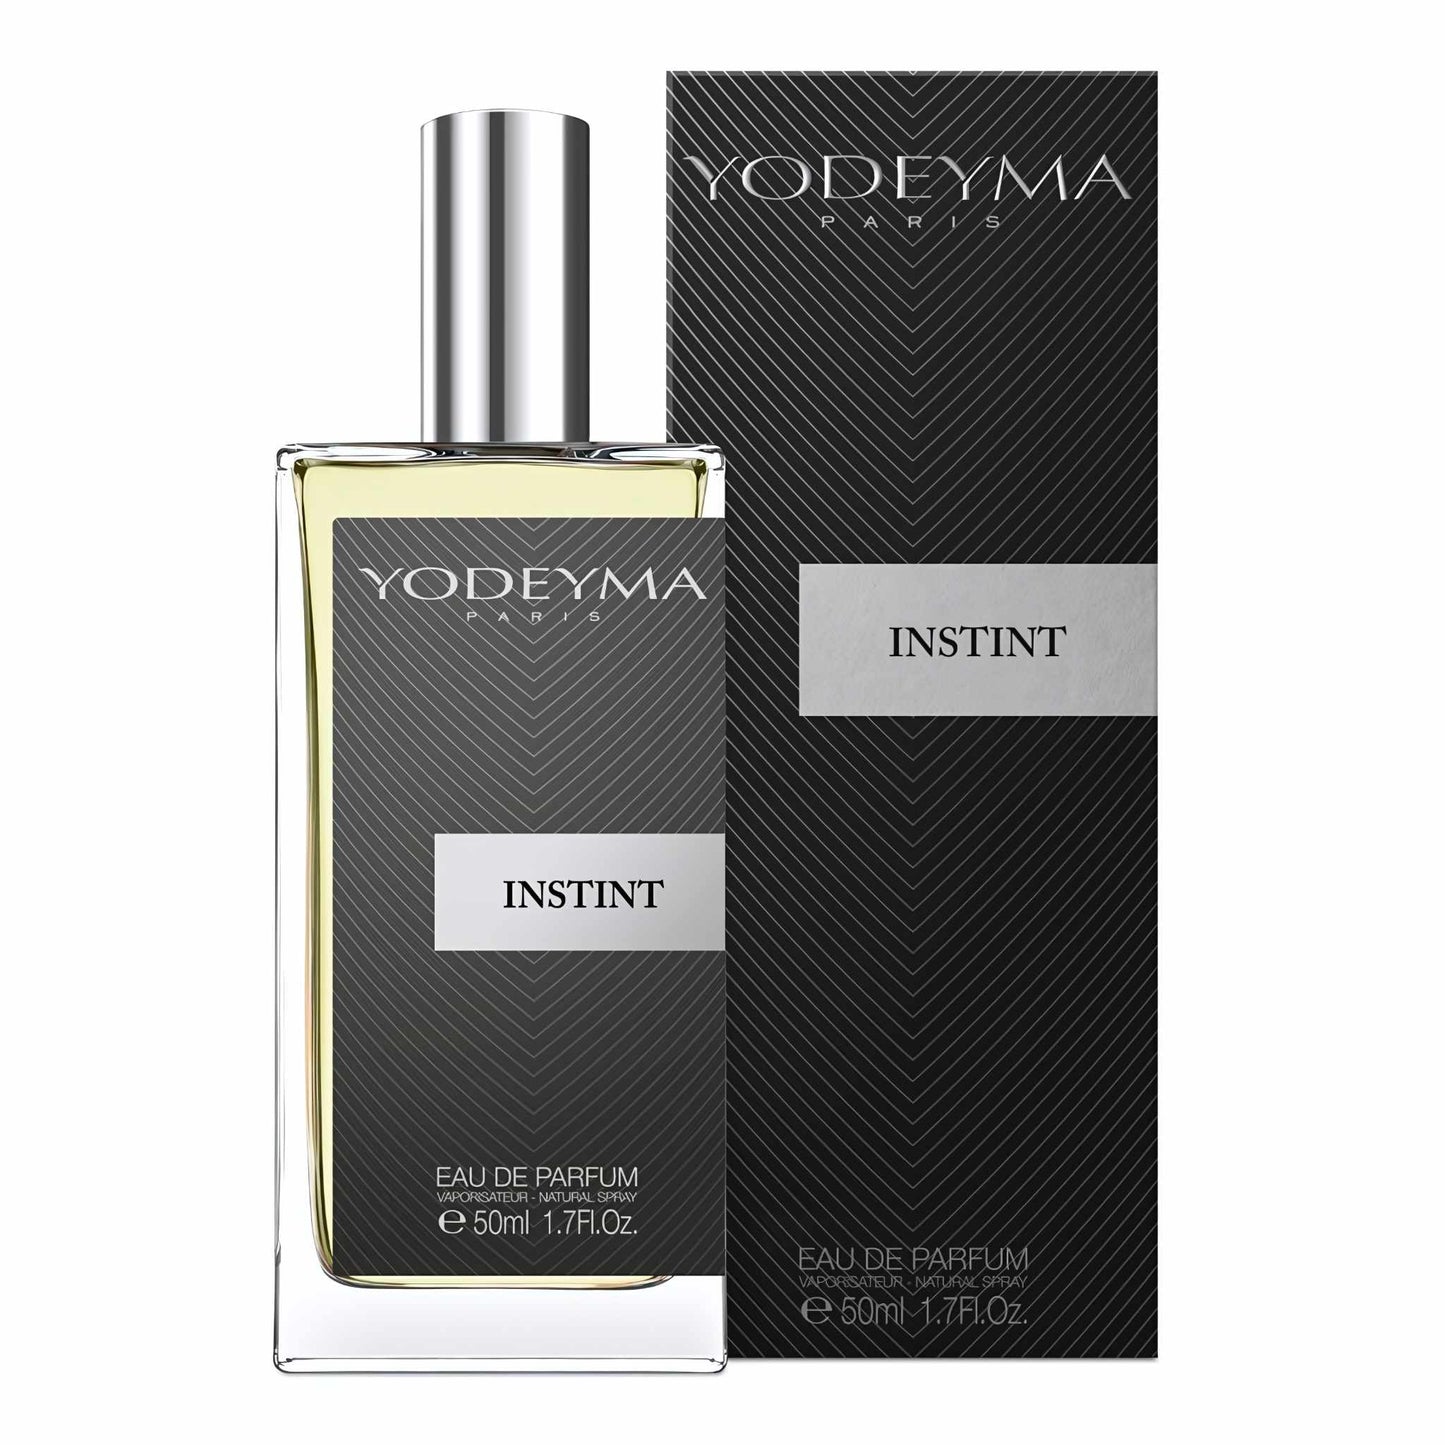 Yodeyma Instint Eau de Parfum 50 ml